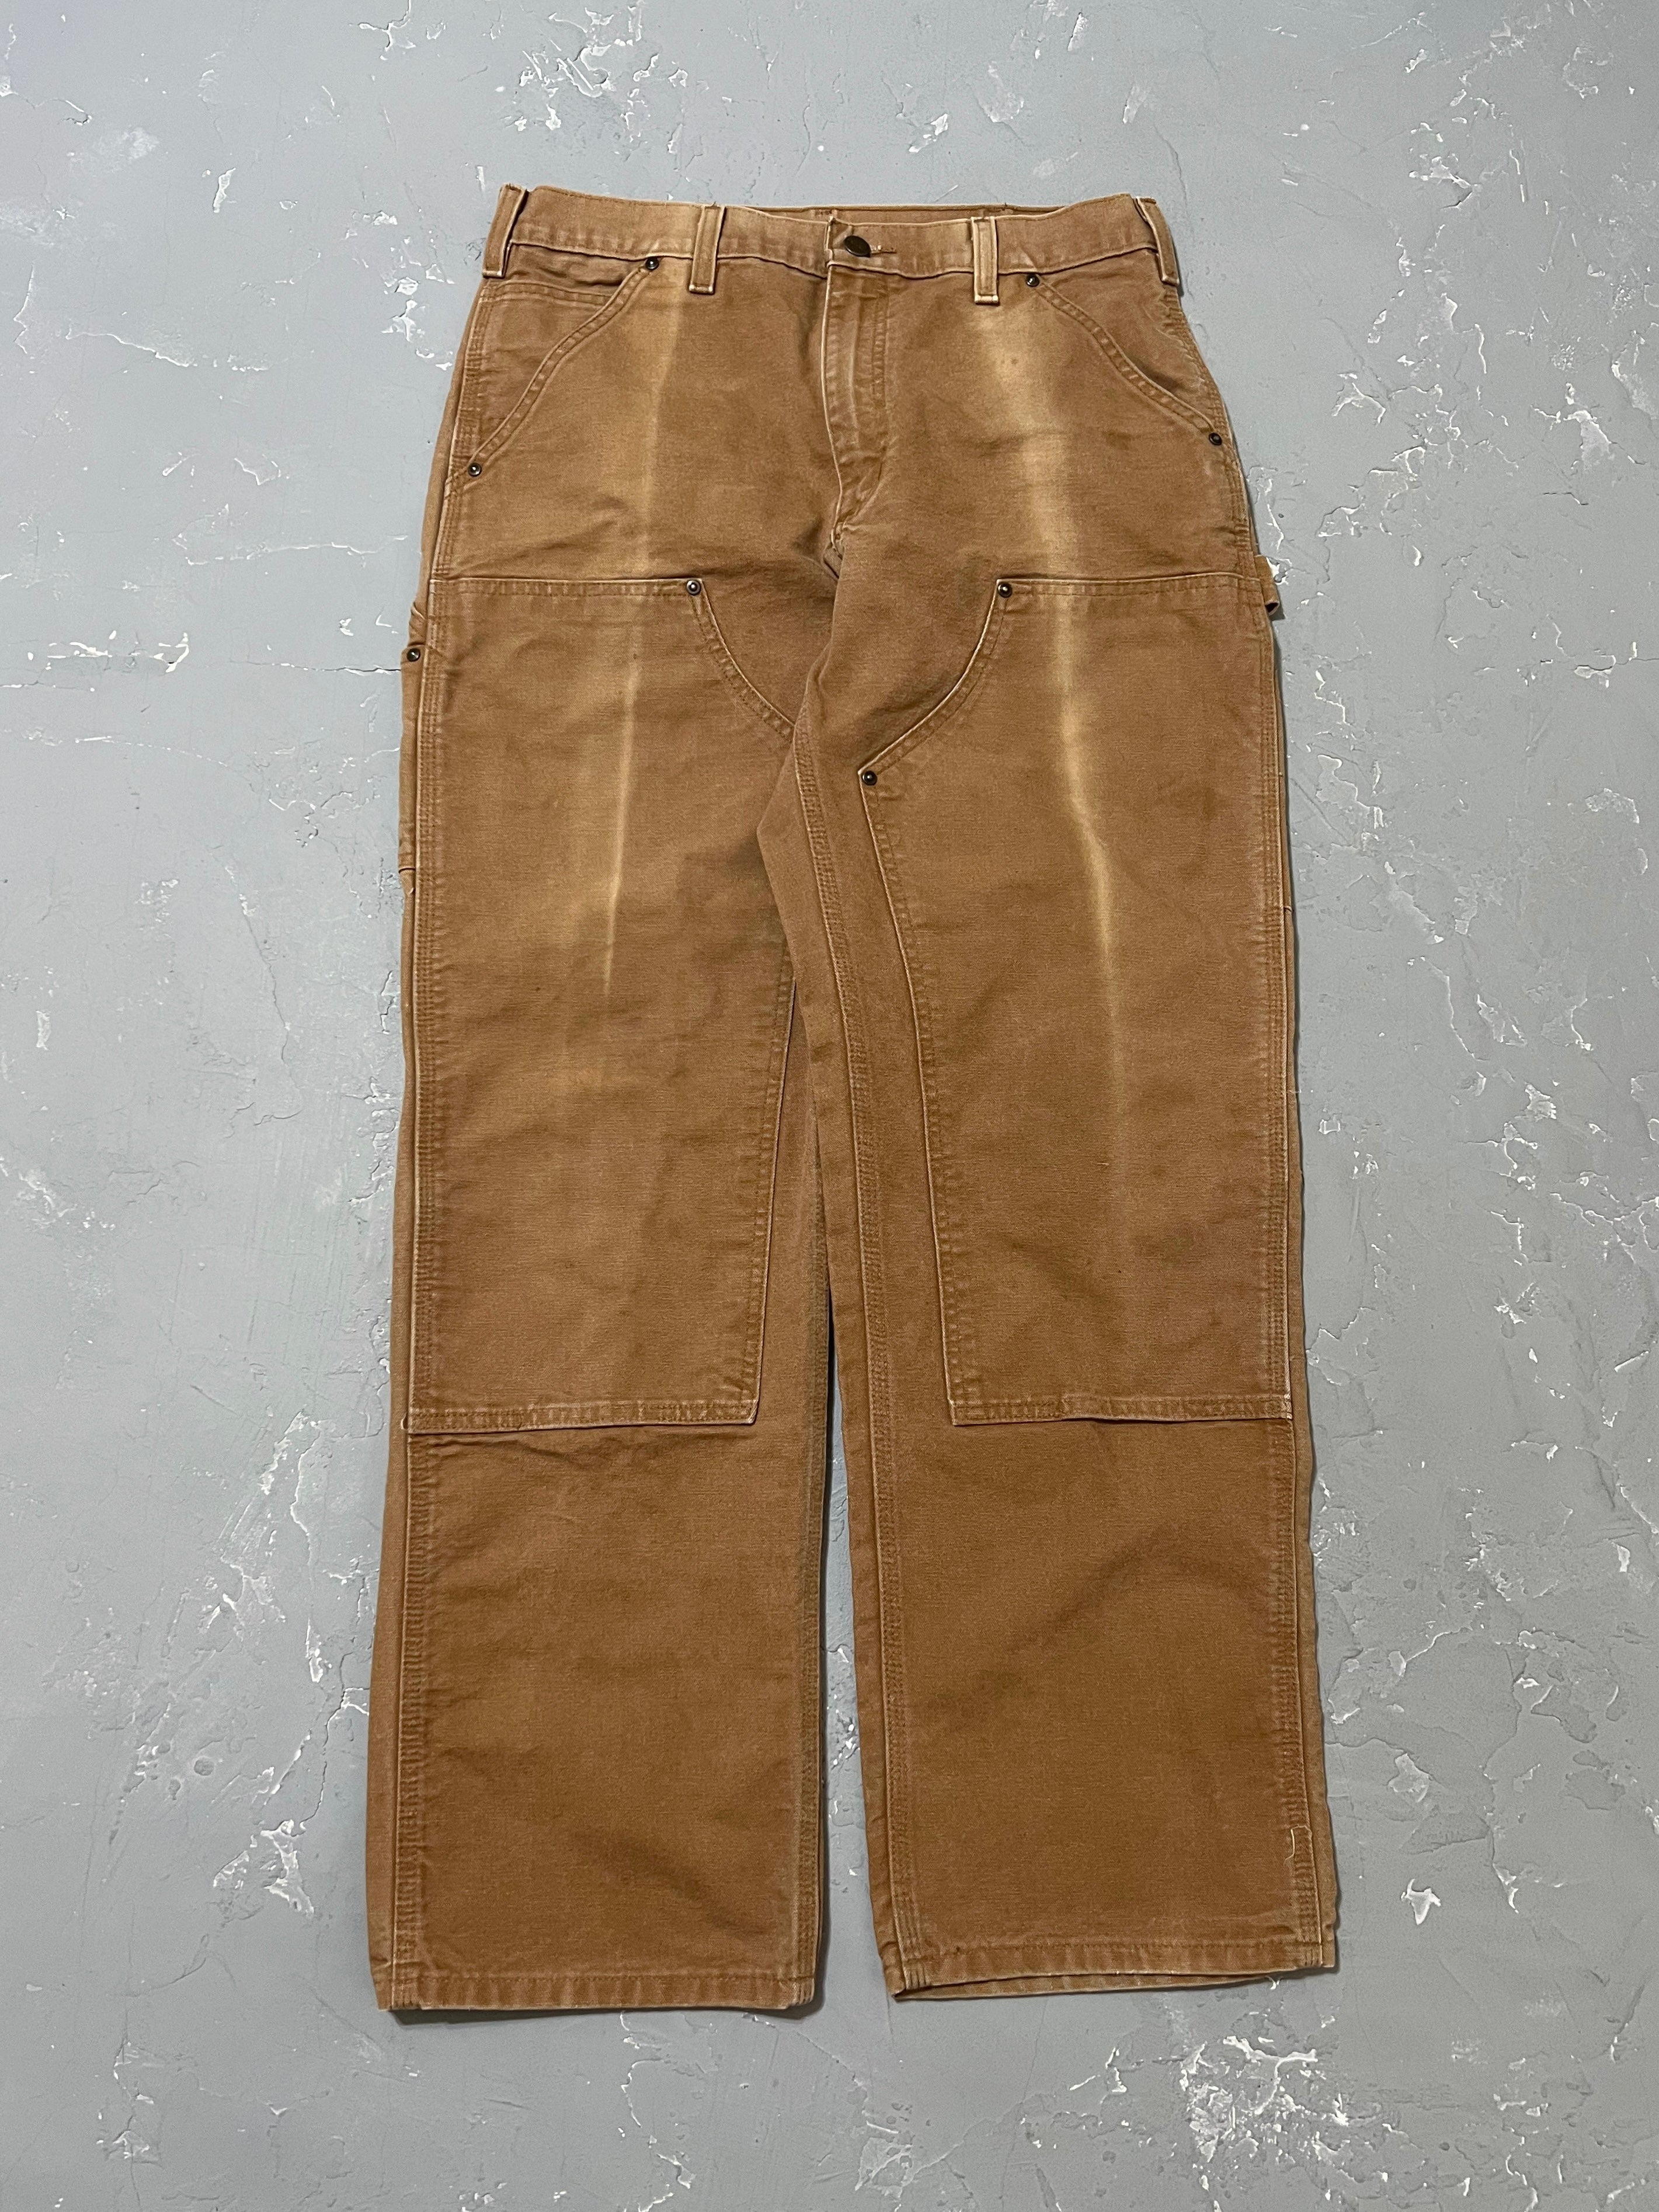 Carhartt Sun Bleached Double Knee Pants [32 x 32]